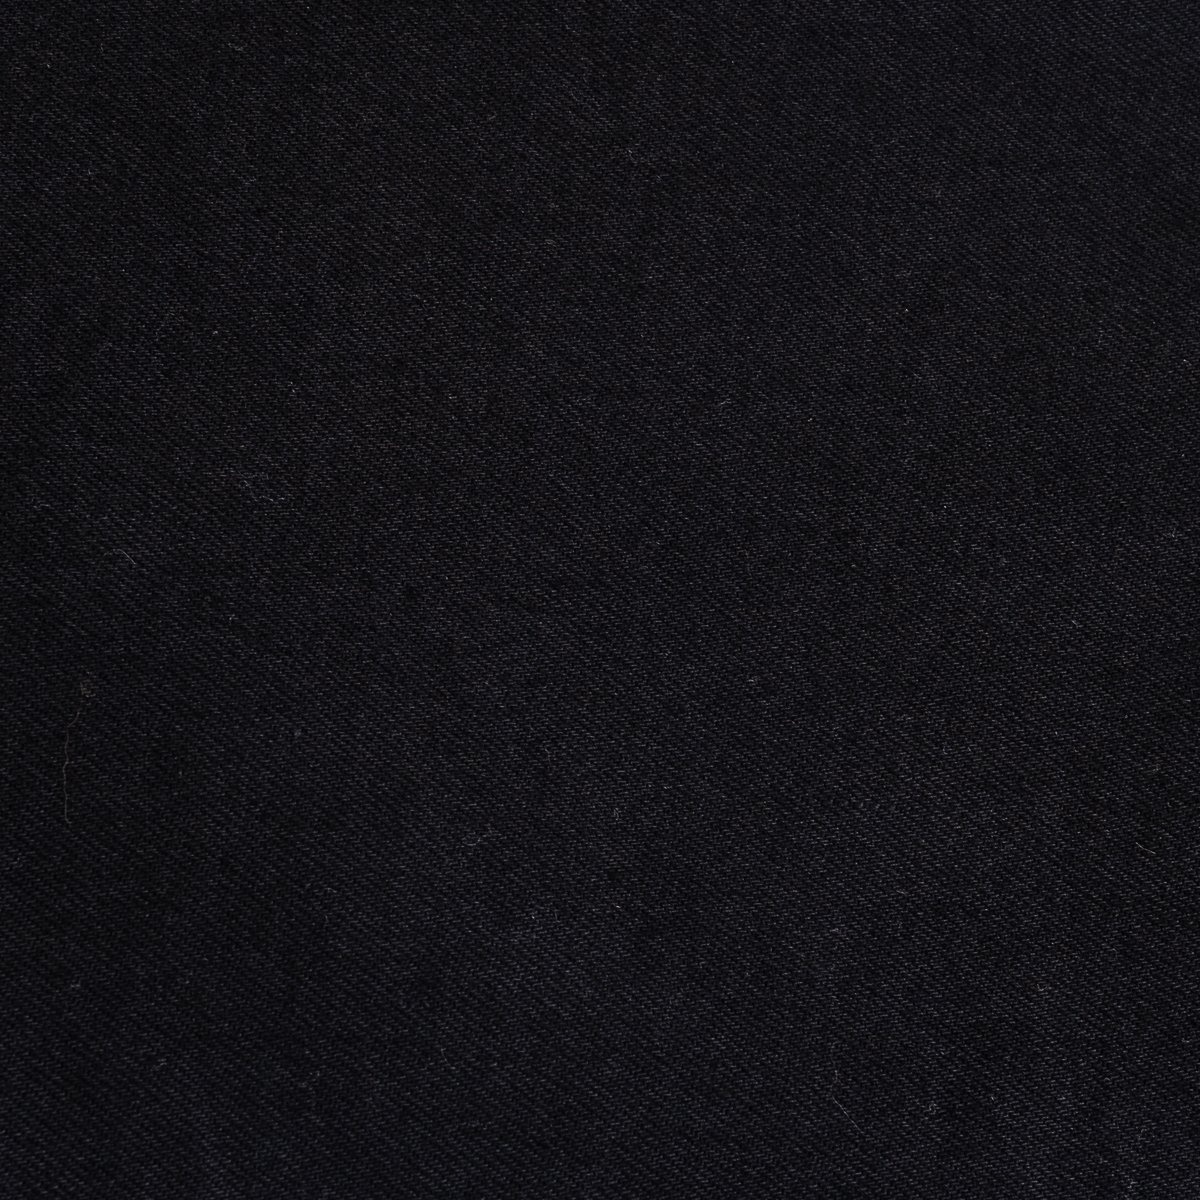 IH-888S-142bb 14oz Selvedge Denim Medium/High Rise Tapered Cut Jeans - Black/Black - 16